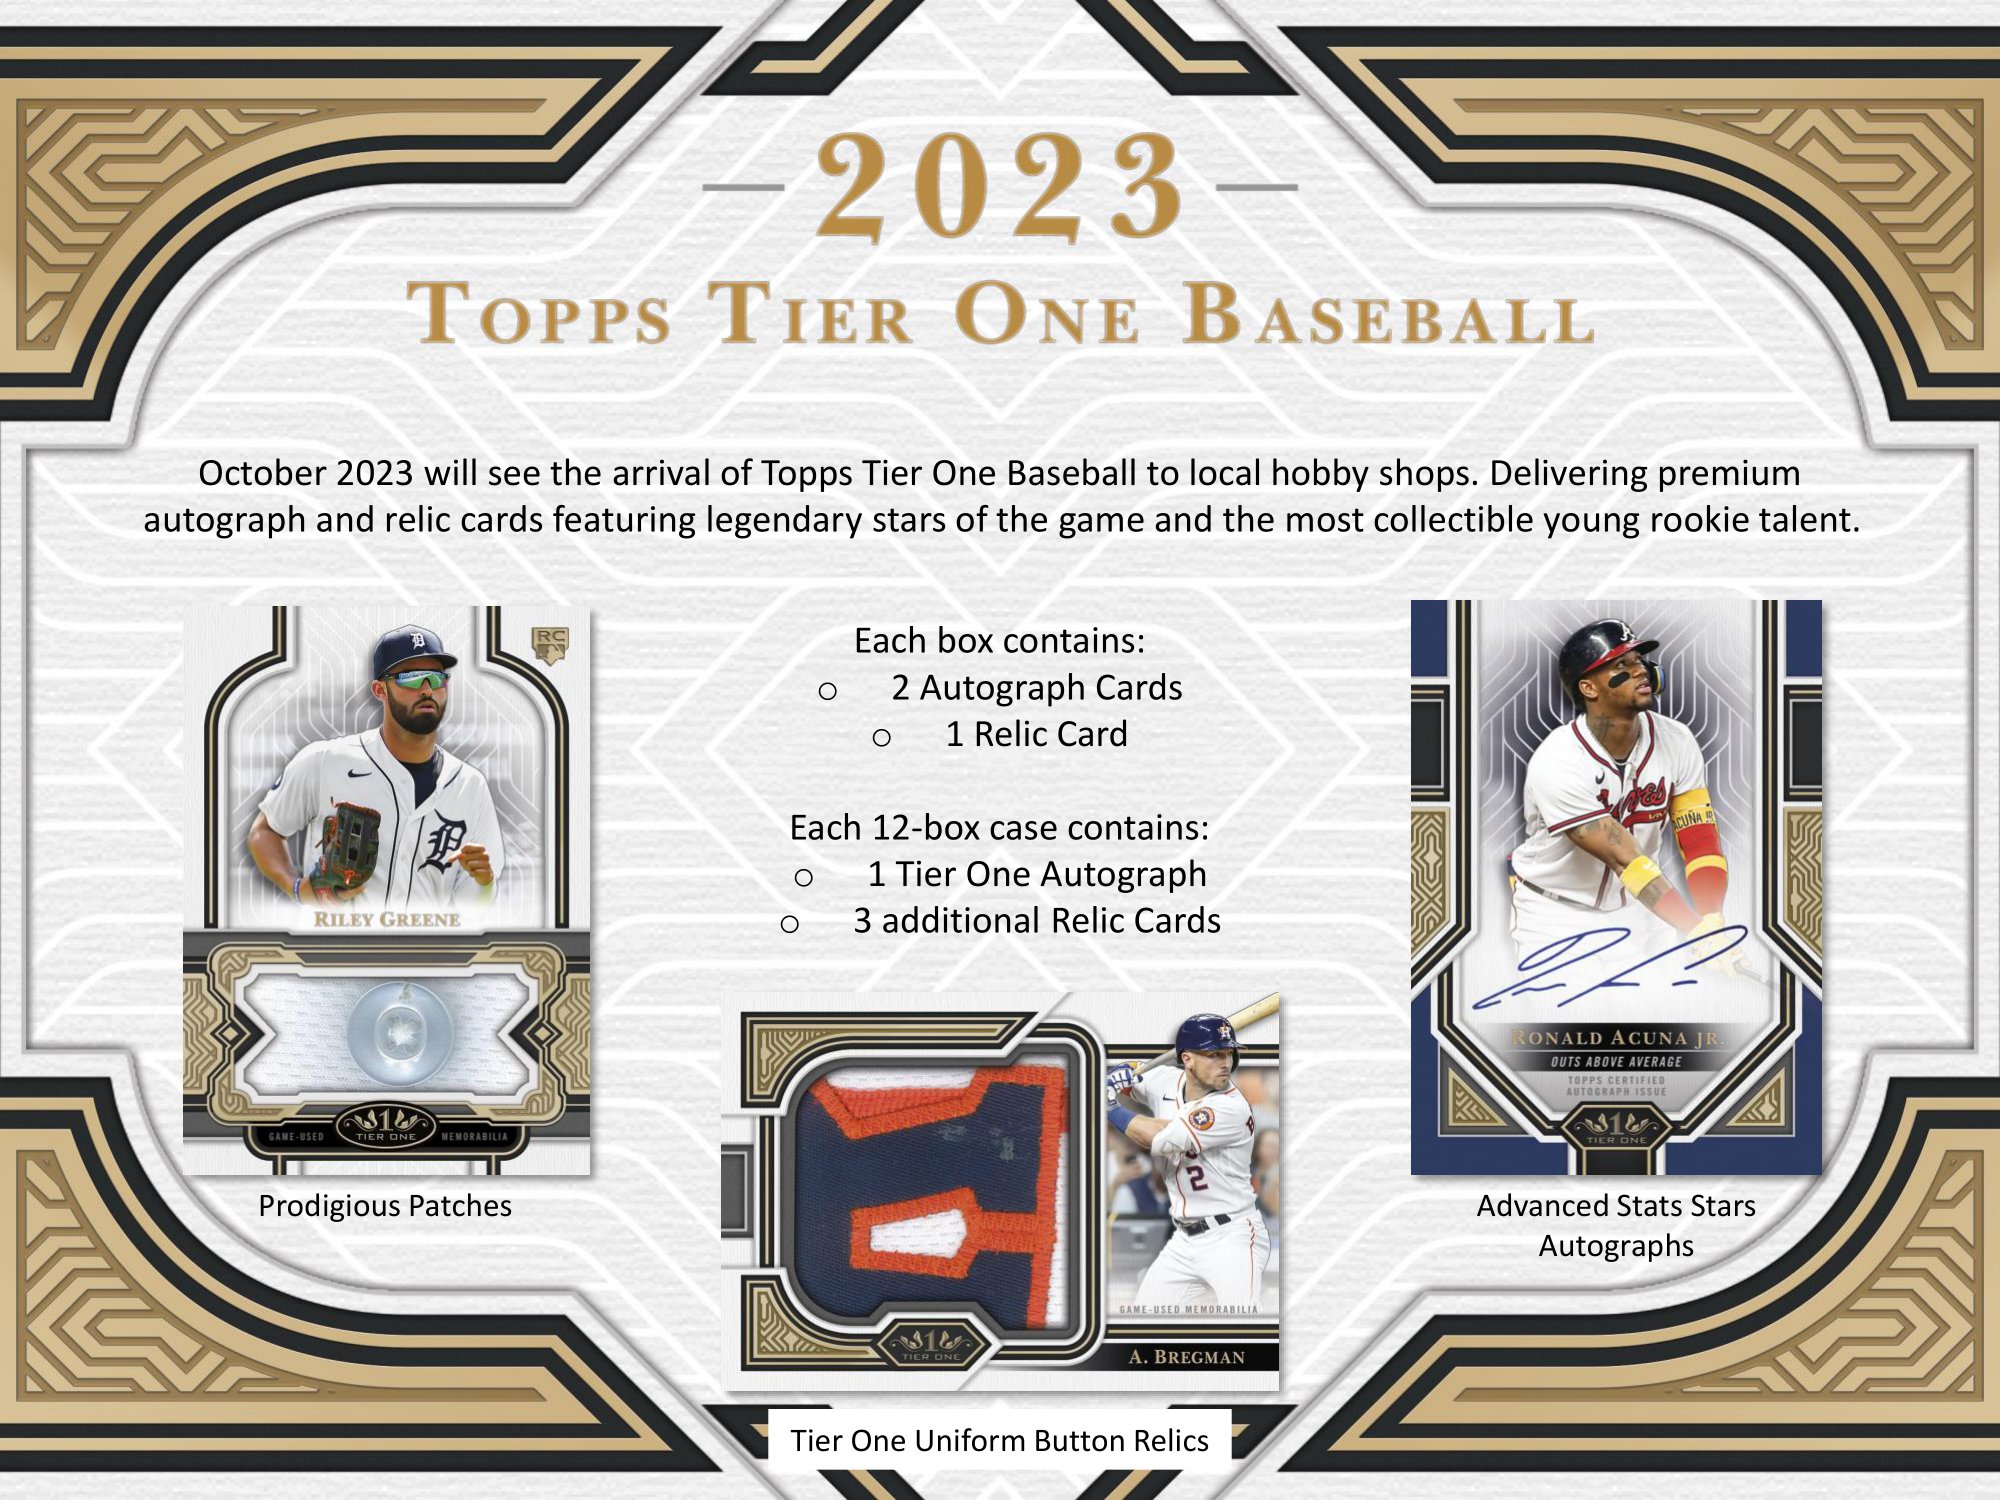 ⚾ MLB 2023 TOPPS TIER ONE BASEBALL【製品情報】 | Trading Card Journal